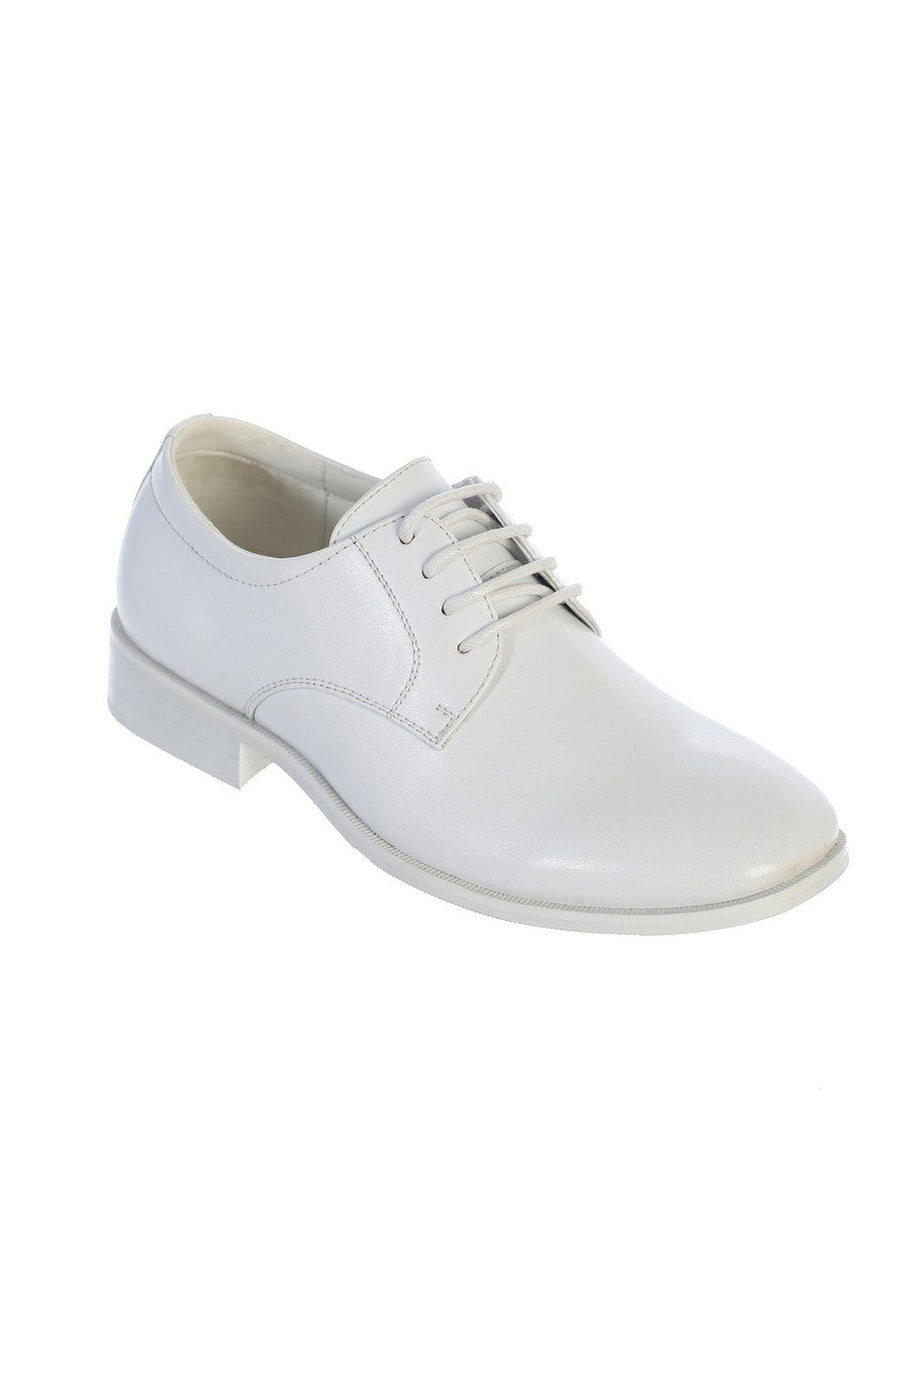 Tip Top "Sonoma" Kids White Matte Tuxedo Shoes